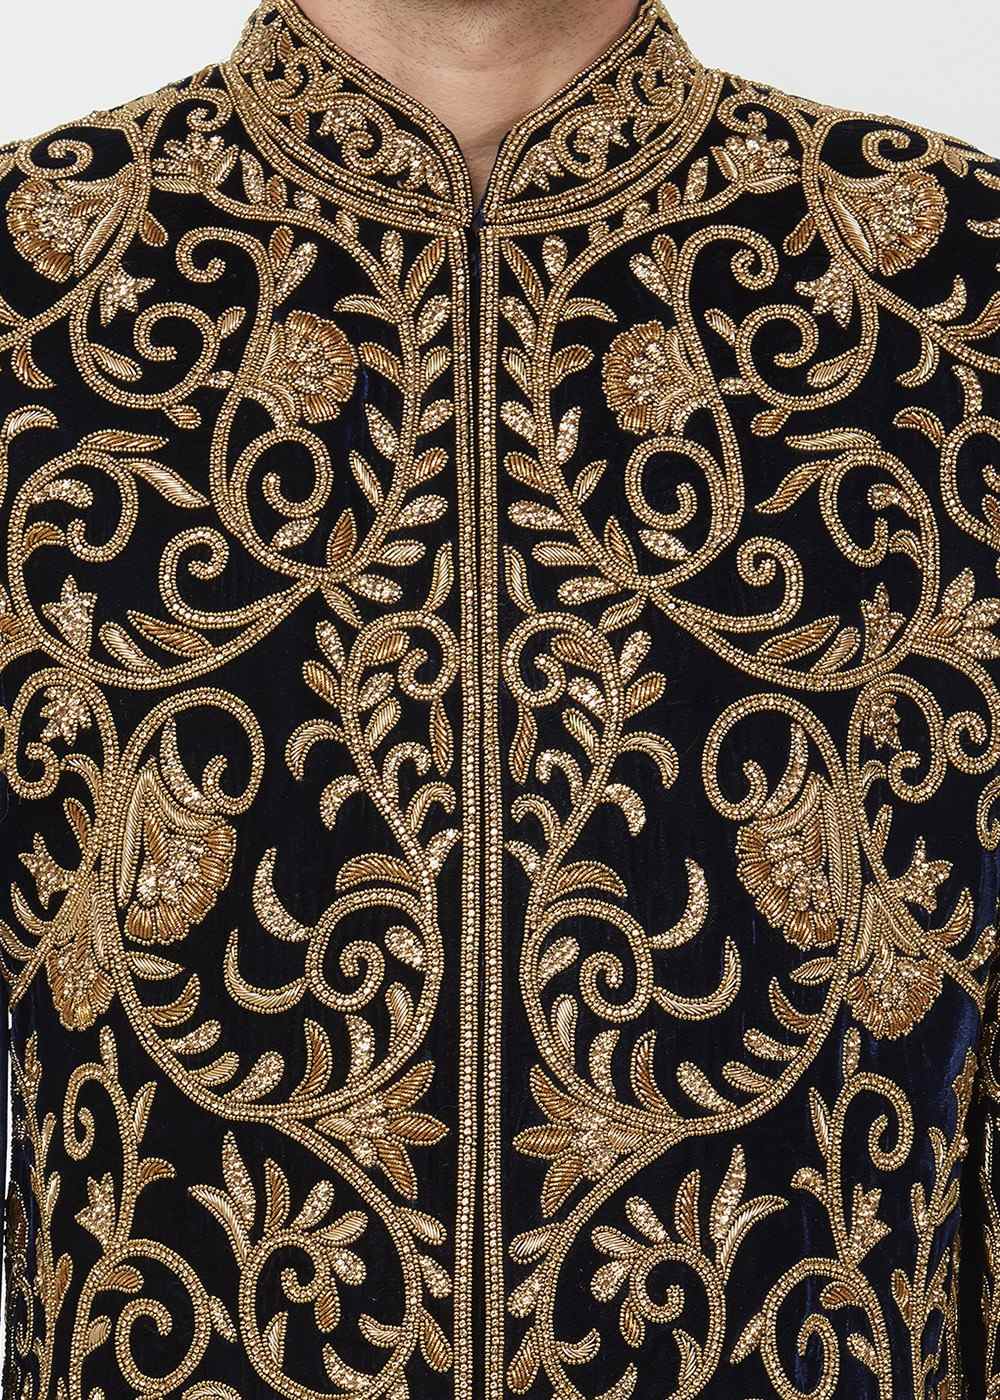 Heavy Embroidered Black Velvet Indo Western Wedding Sherwani - Ethnic World